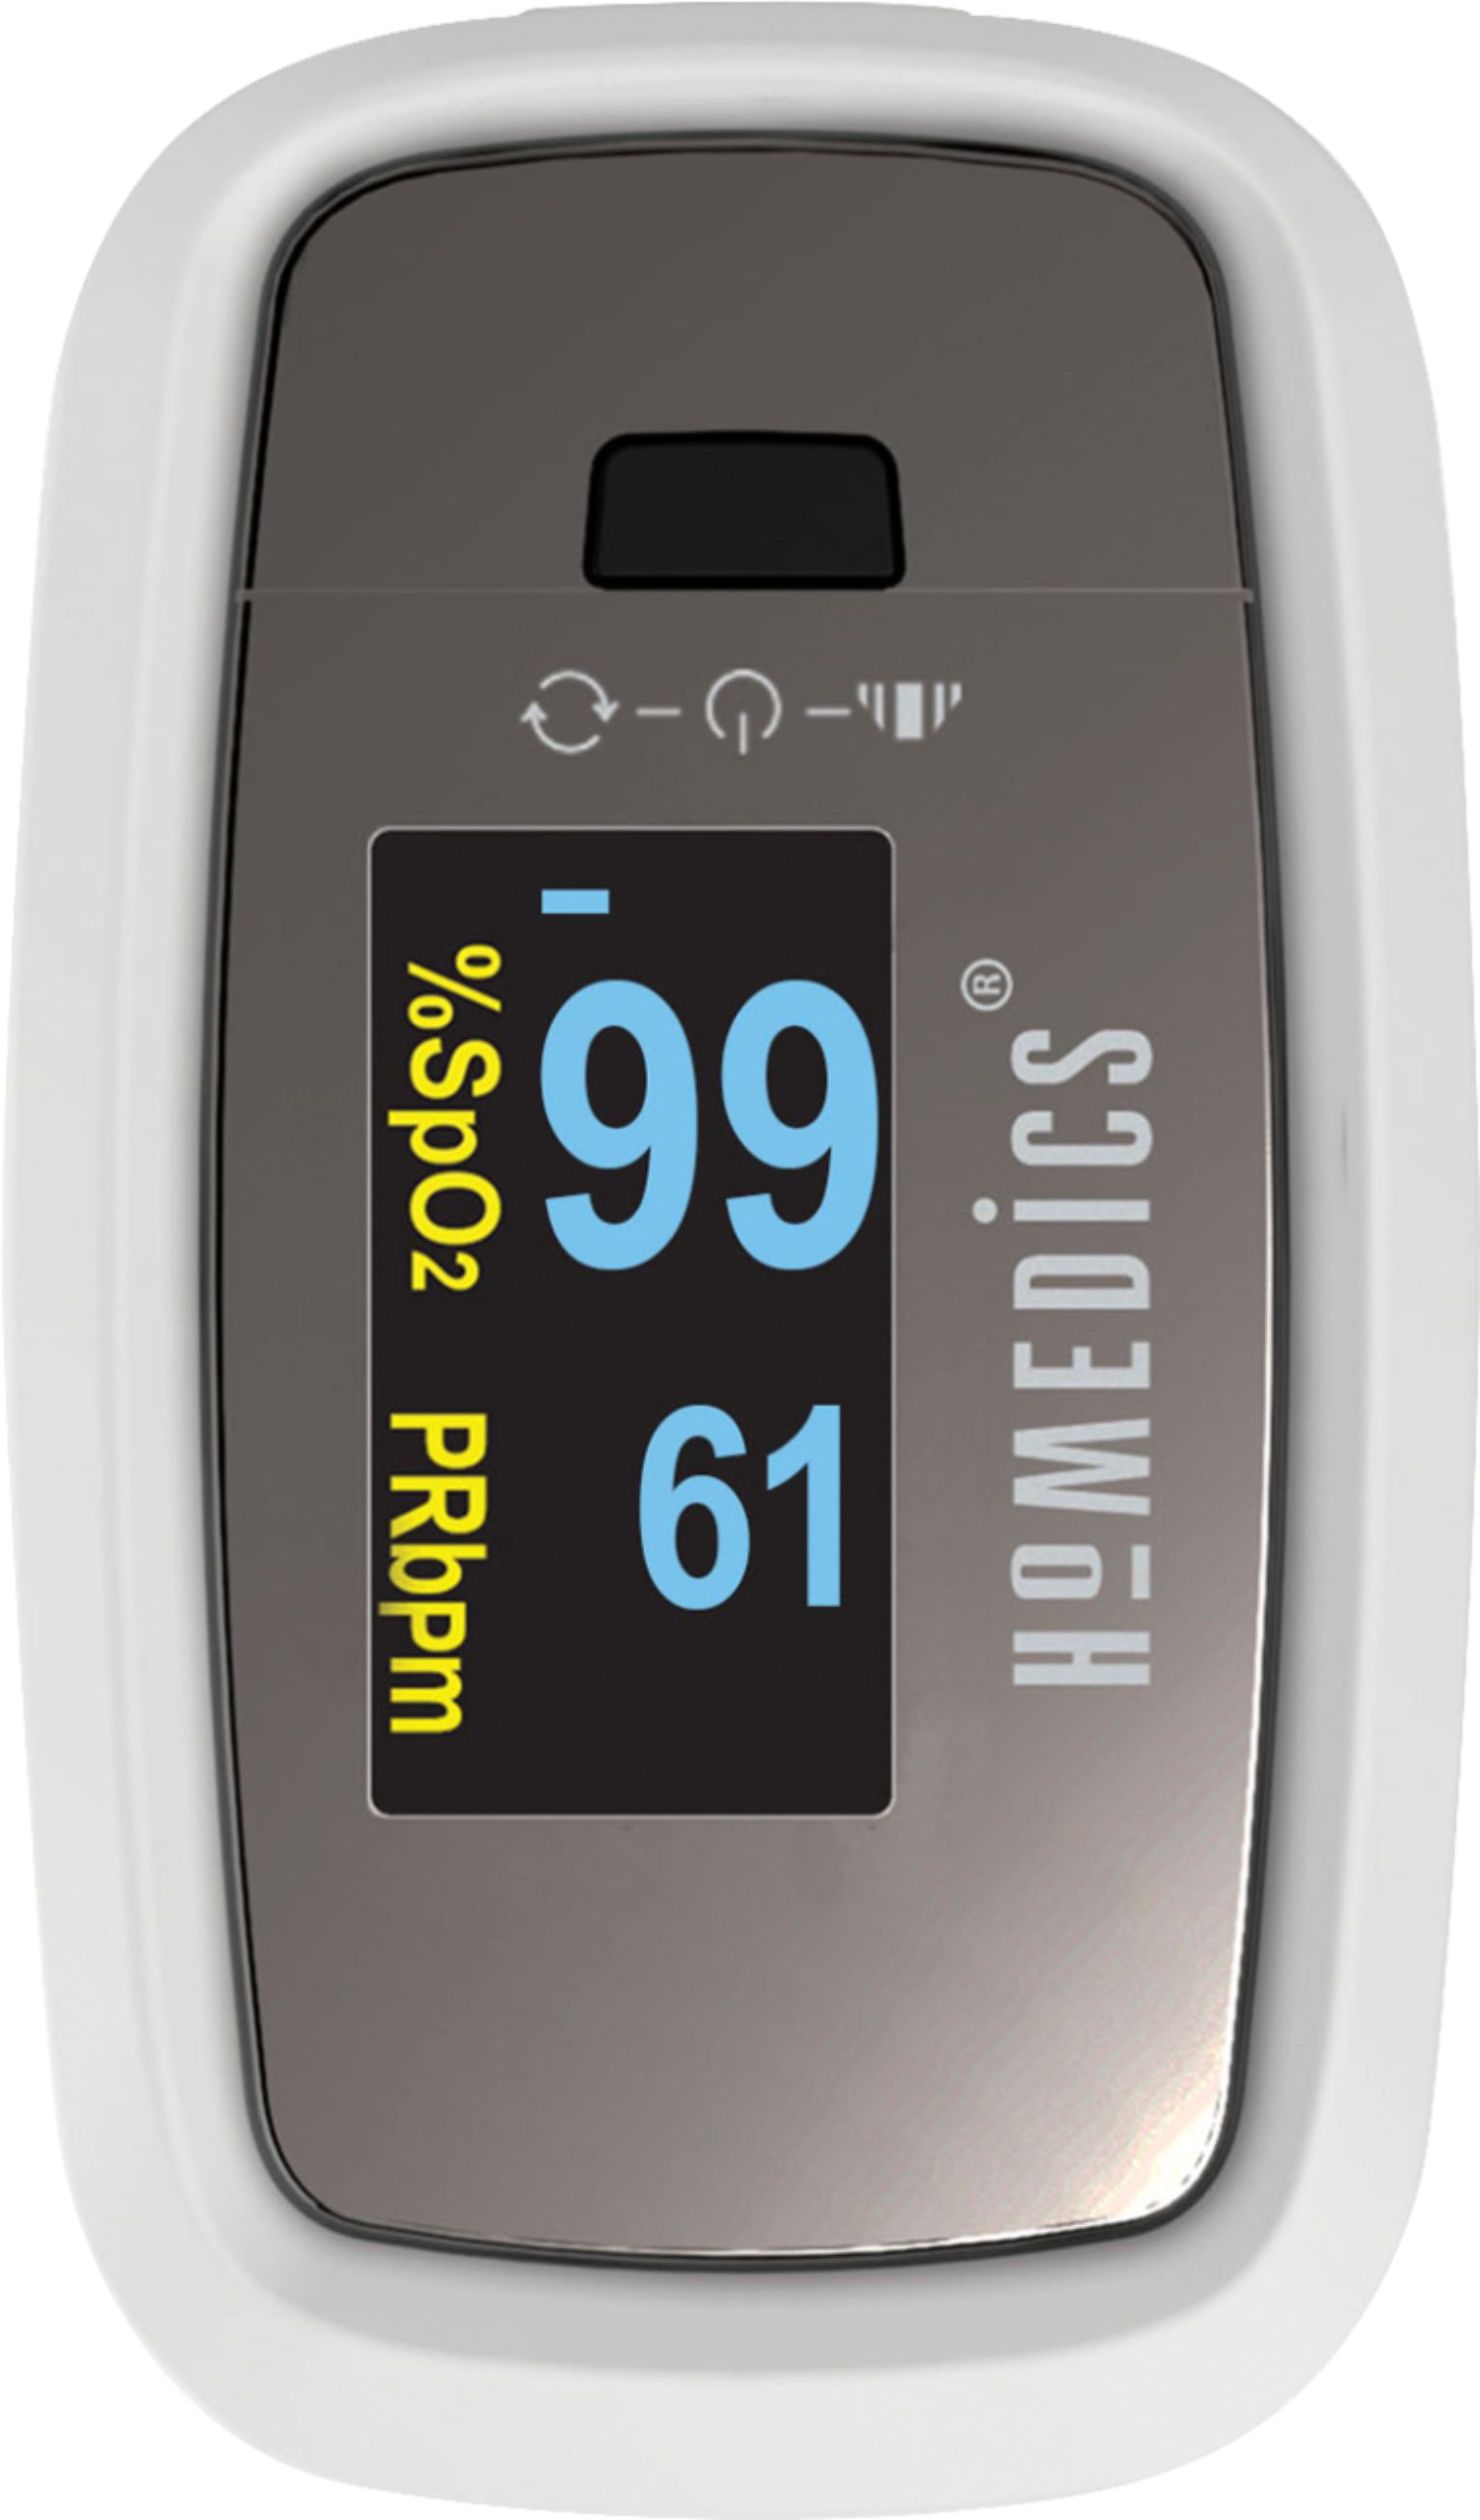 HoMedics - Premium Pulse Oximeter - White